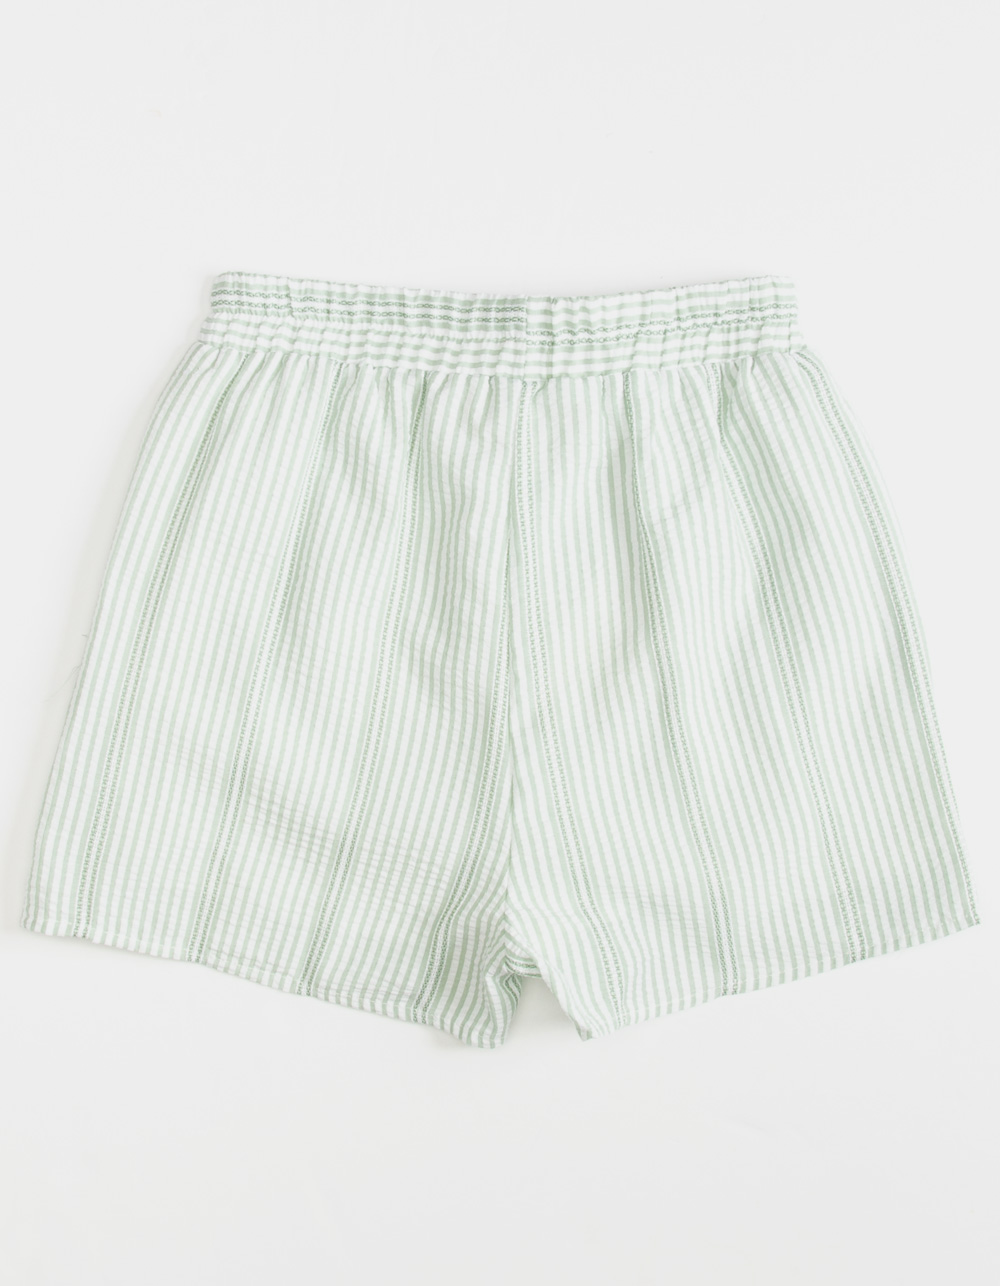 HAYDEN Stripe Girls Shorts - GREEN COMBO | Tillys